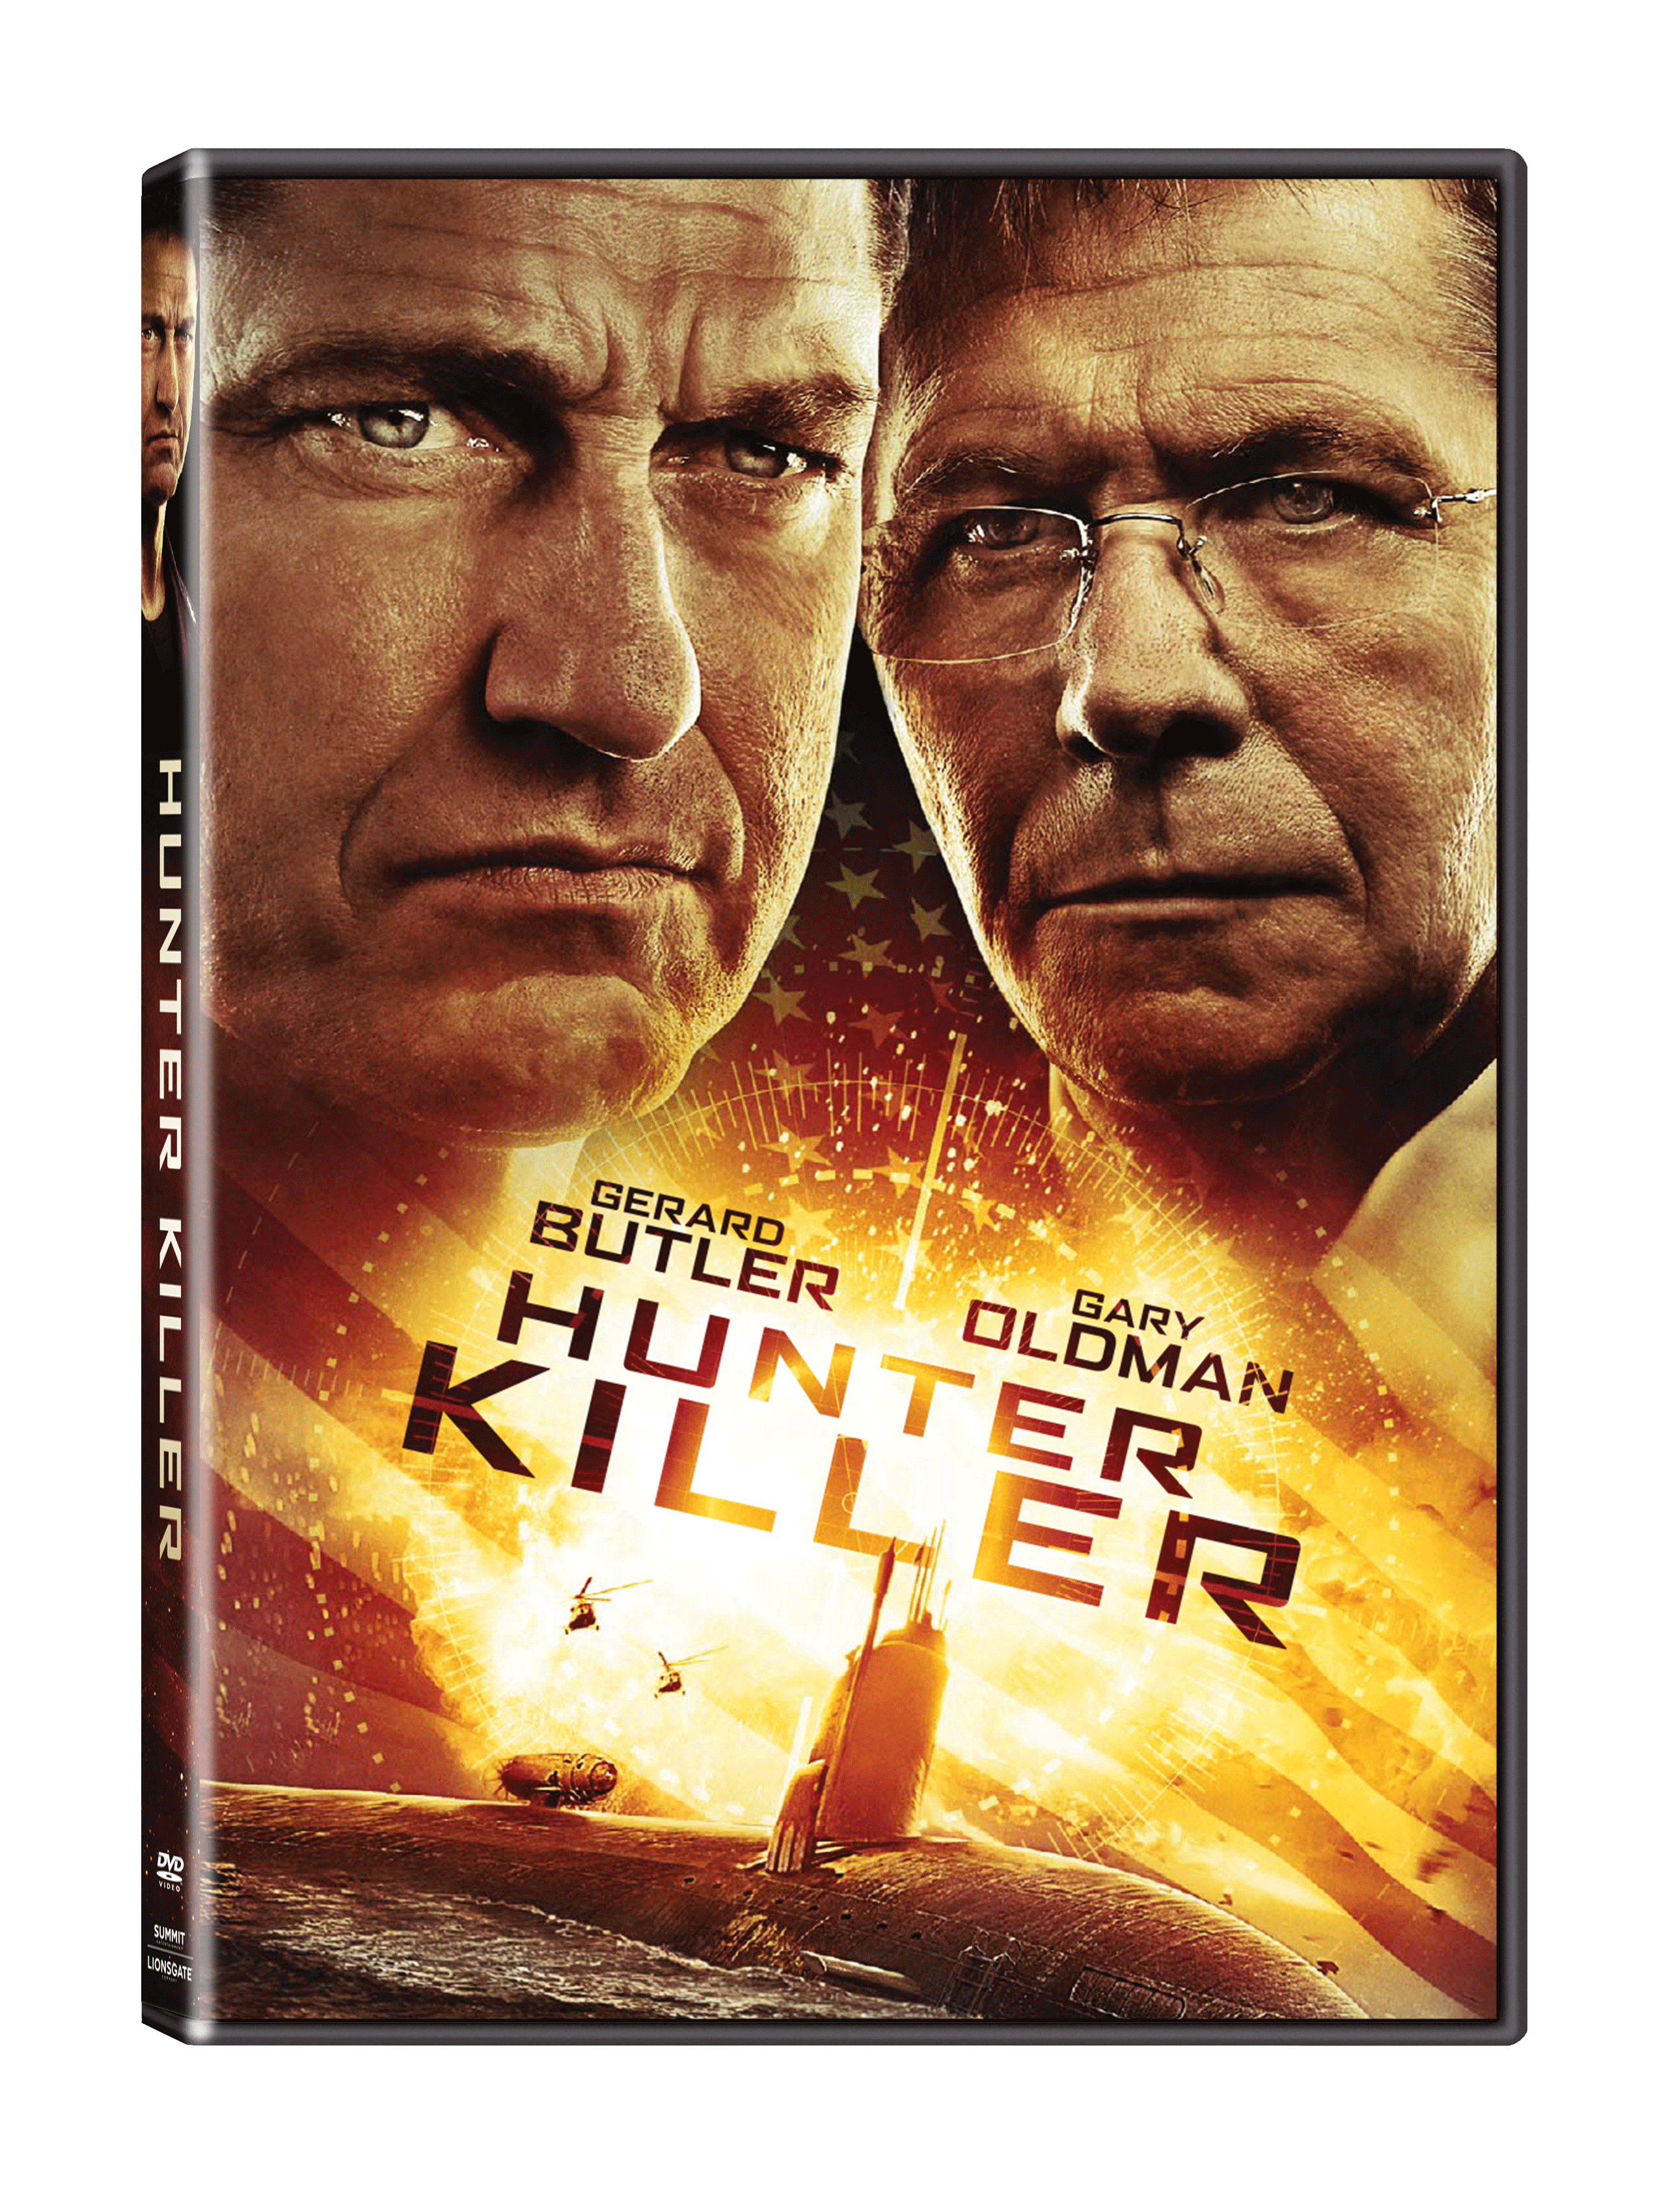 Hunter Killer DVD cover (Lionsgate Home Entertainment)